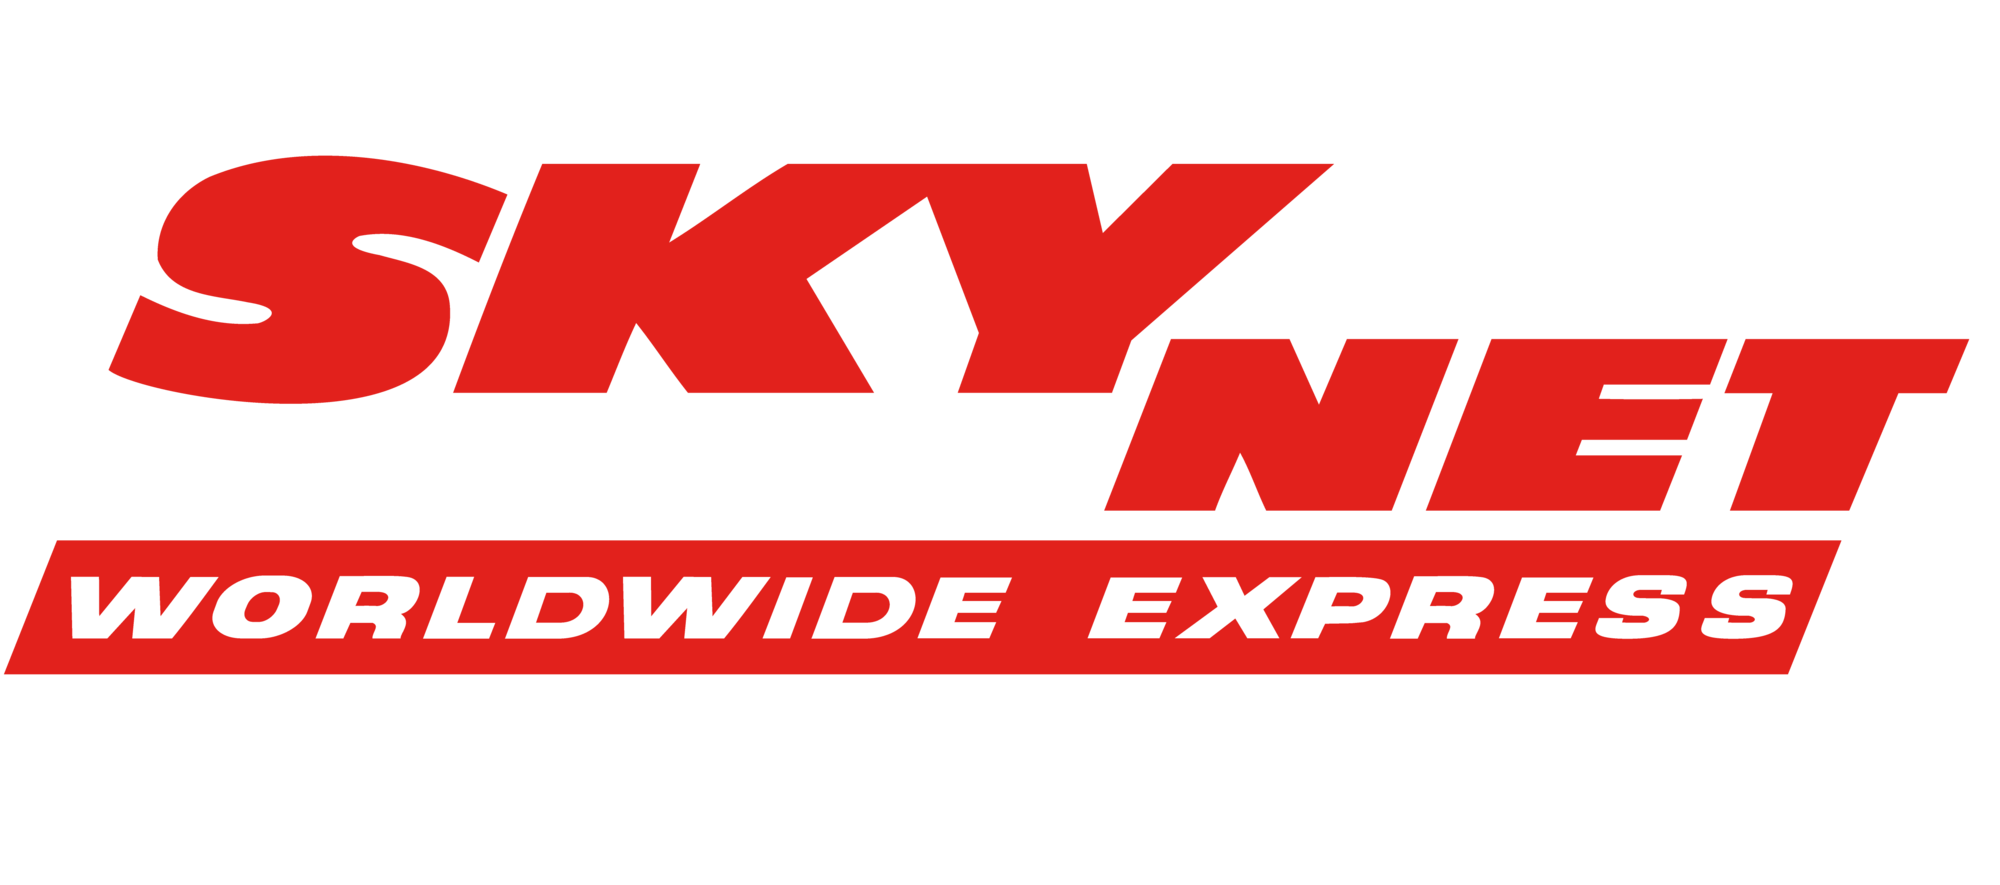 Skynet Worldwide Express - MyJobafrica.com.ng